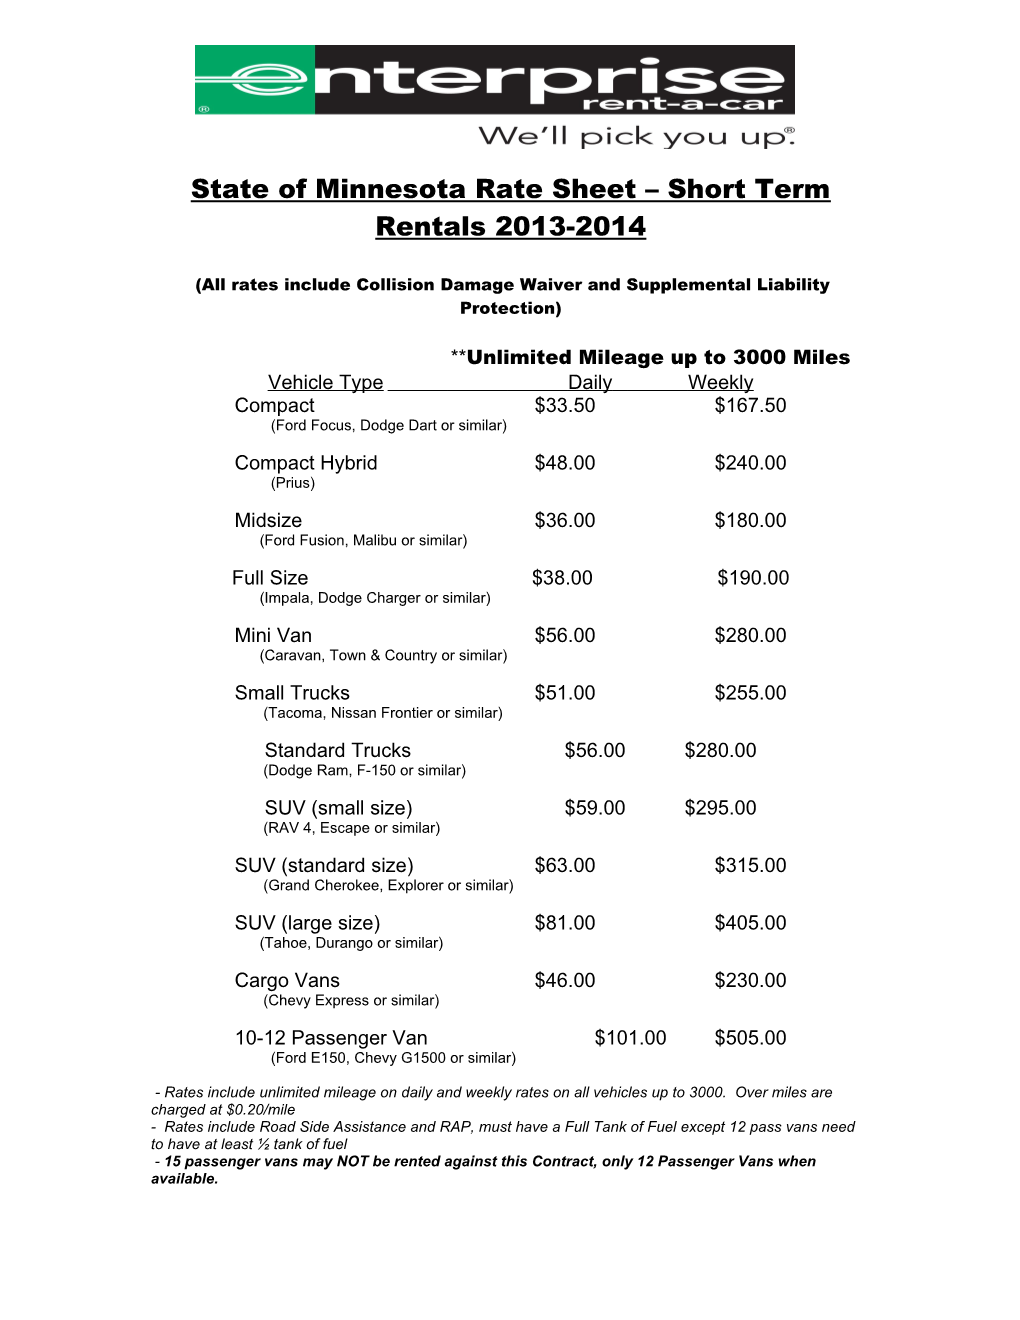 State of Minnesota Rate Sheet Short Term Rentals 2013-2014